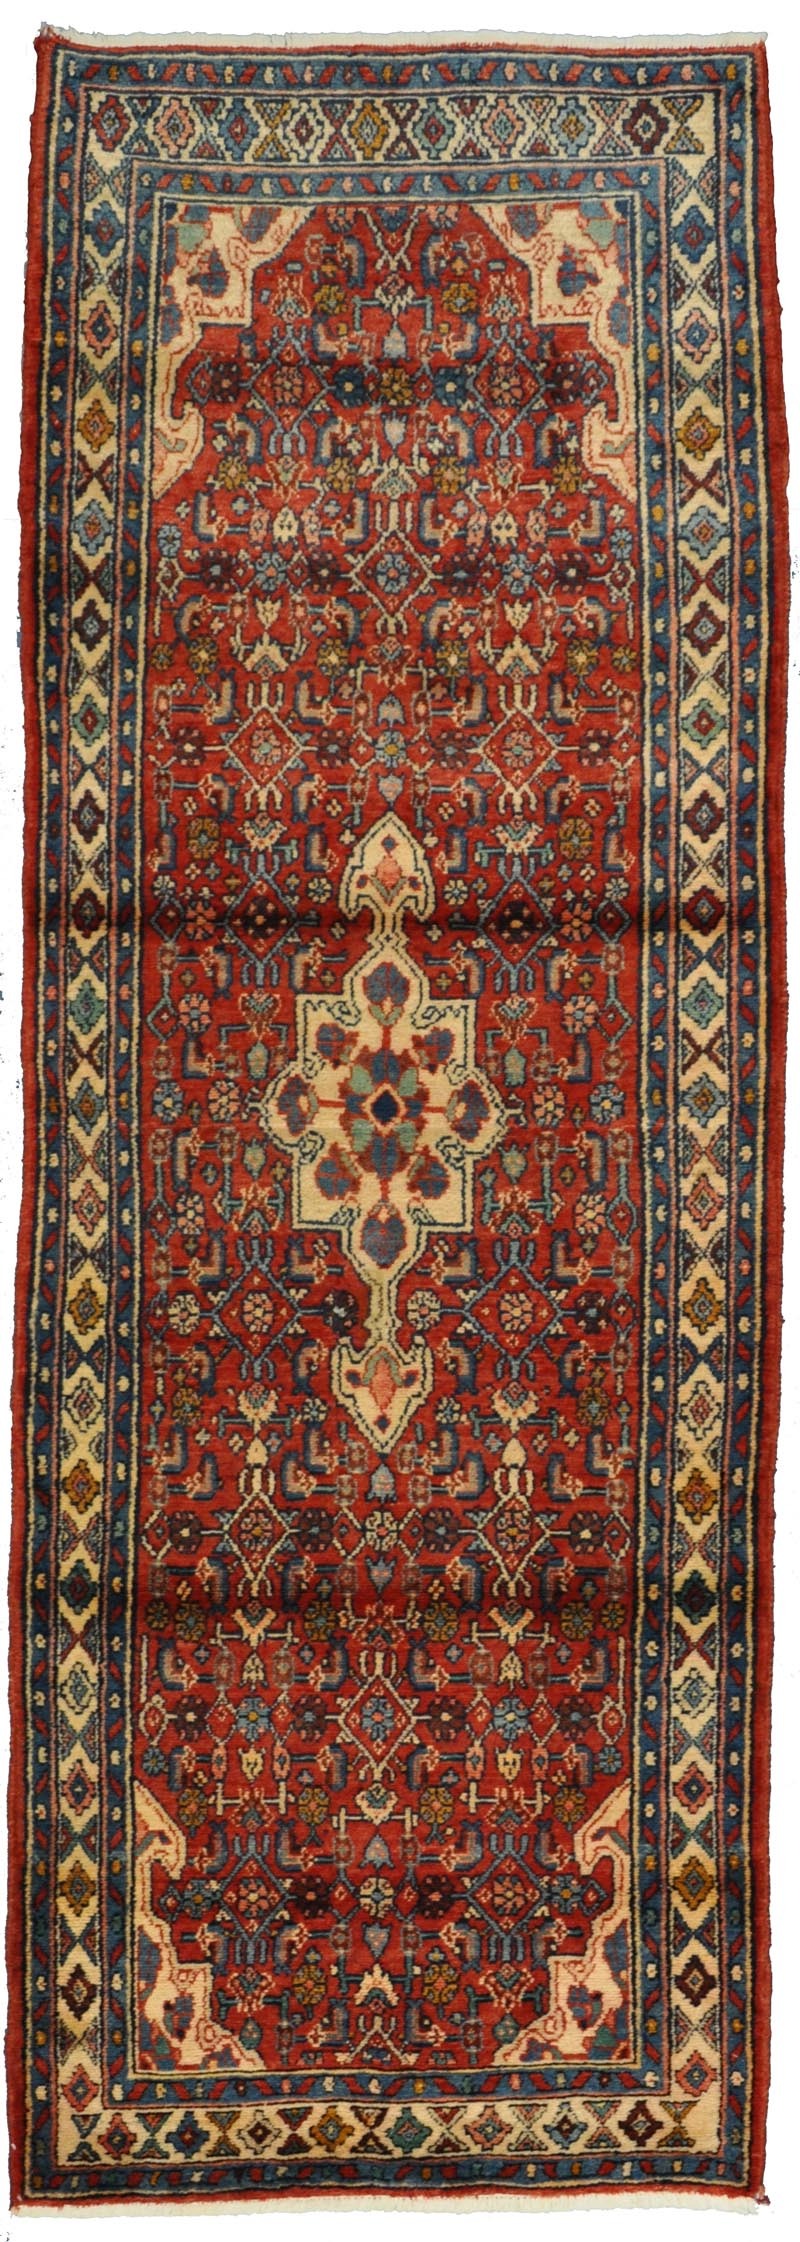 handmade vintage persian rug vintage persian carpet antique carpets online rug store orange county rug carpet store refined carpet rugs